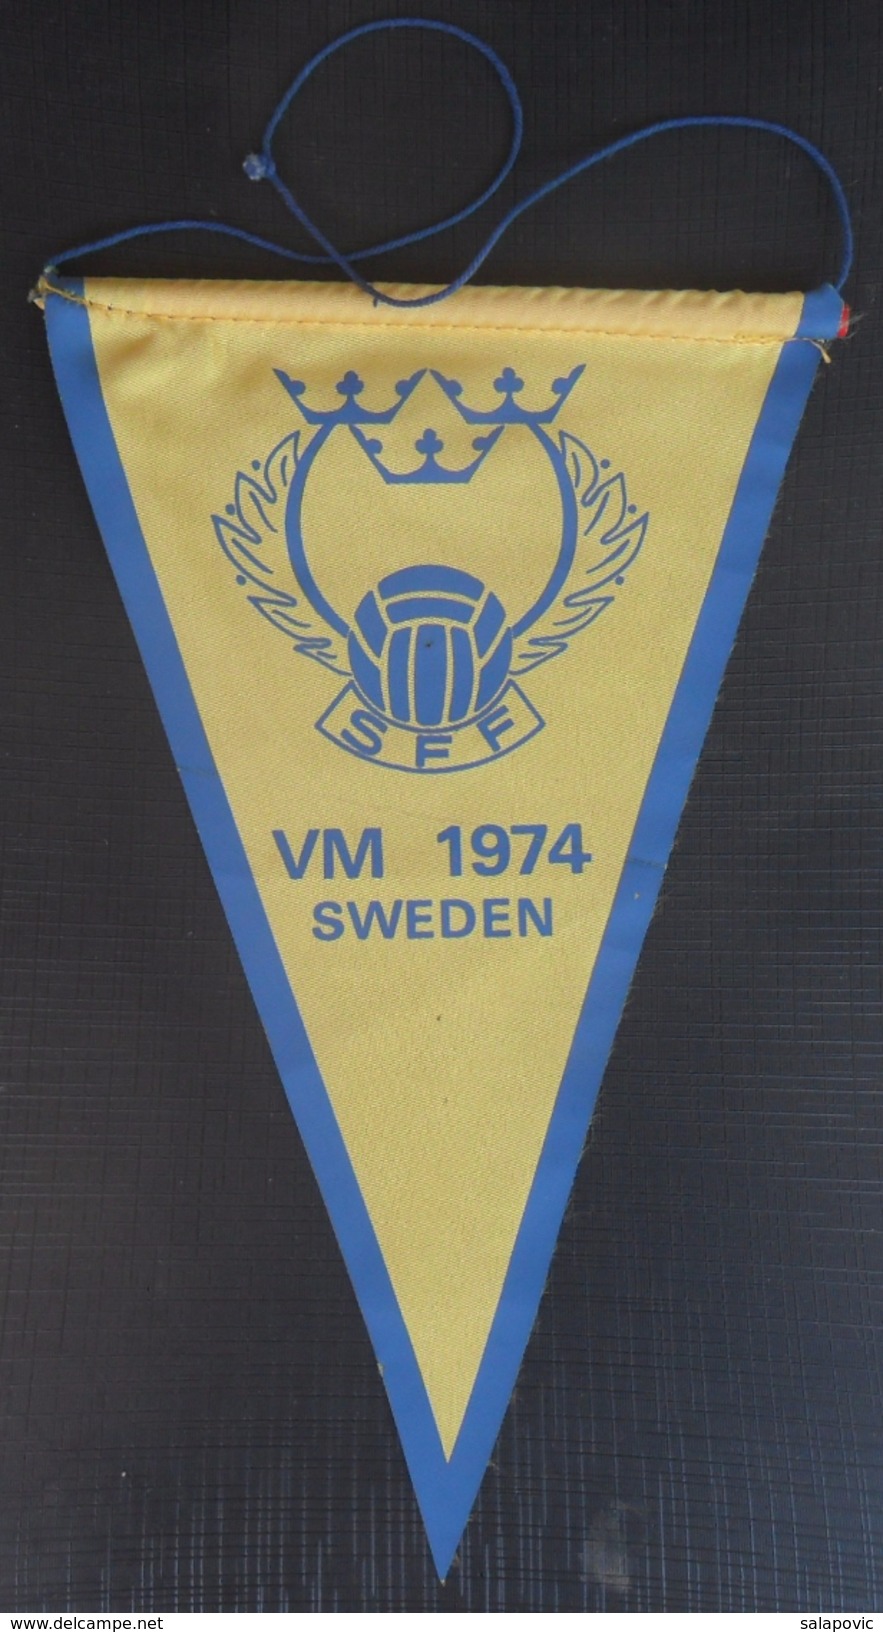 Sweden Football Federation VM 1974, World Cup Germany  FOOTBALL CLUB, SOCCER / FUTBOL / CALCIO, OLD PENNANT, SPORTS FLAG - Uniformes Recordatorios & Misc